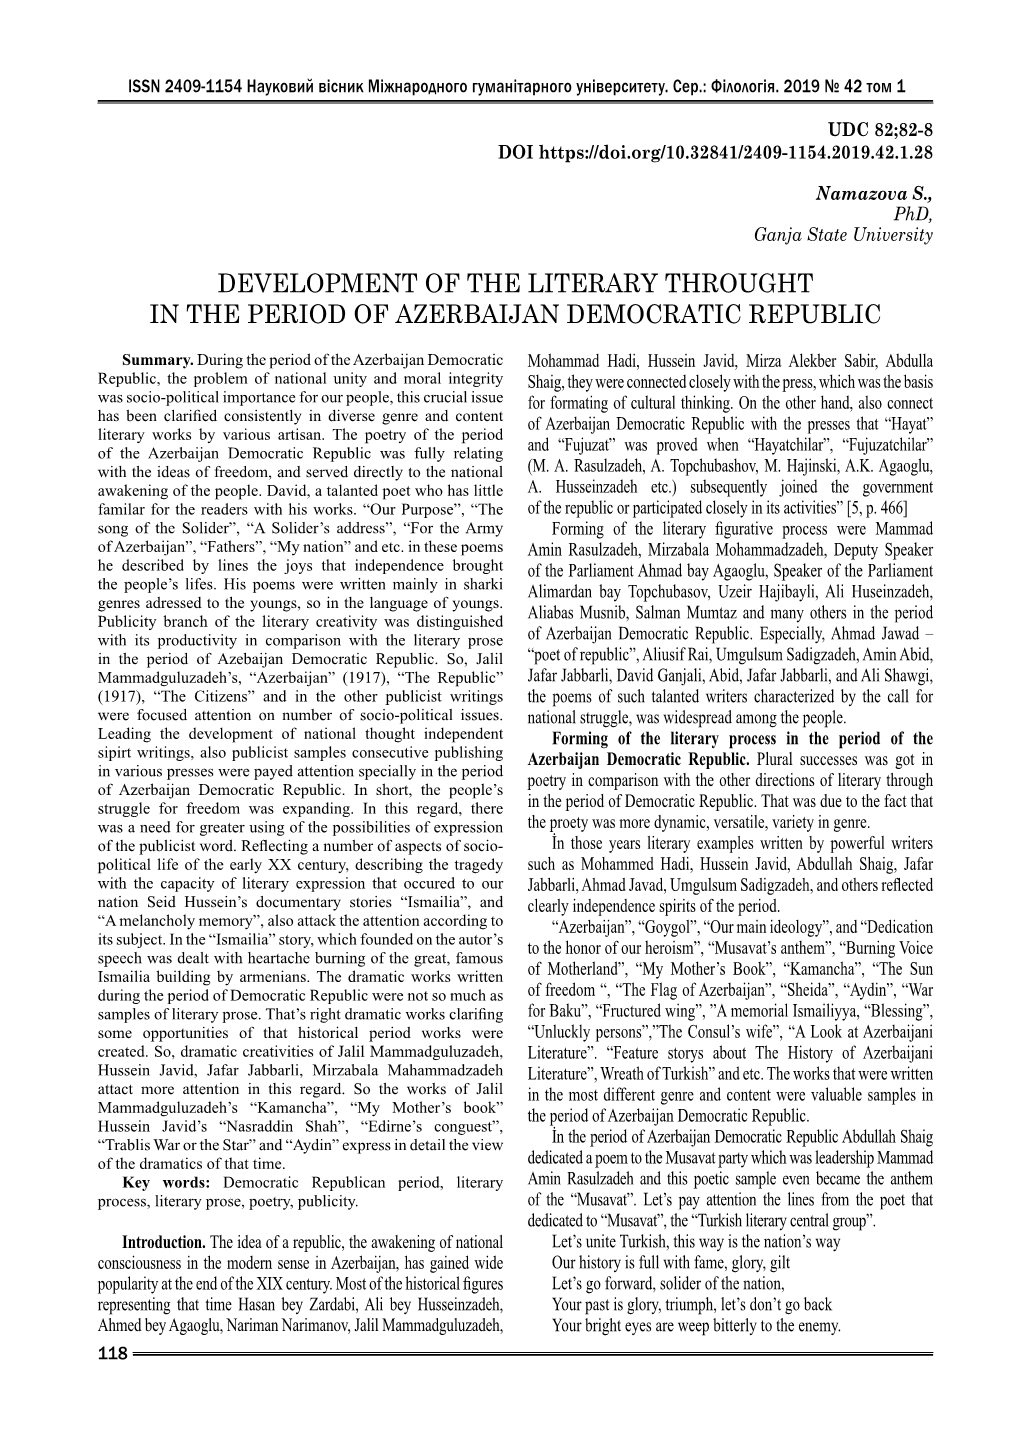 Development of the Literary Throught in the Period of Azerbaijan Democratic Republic